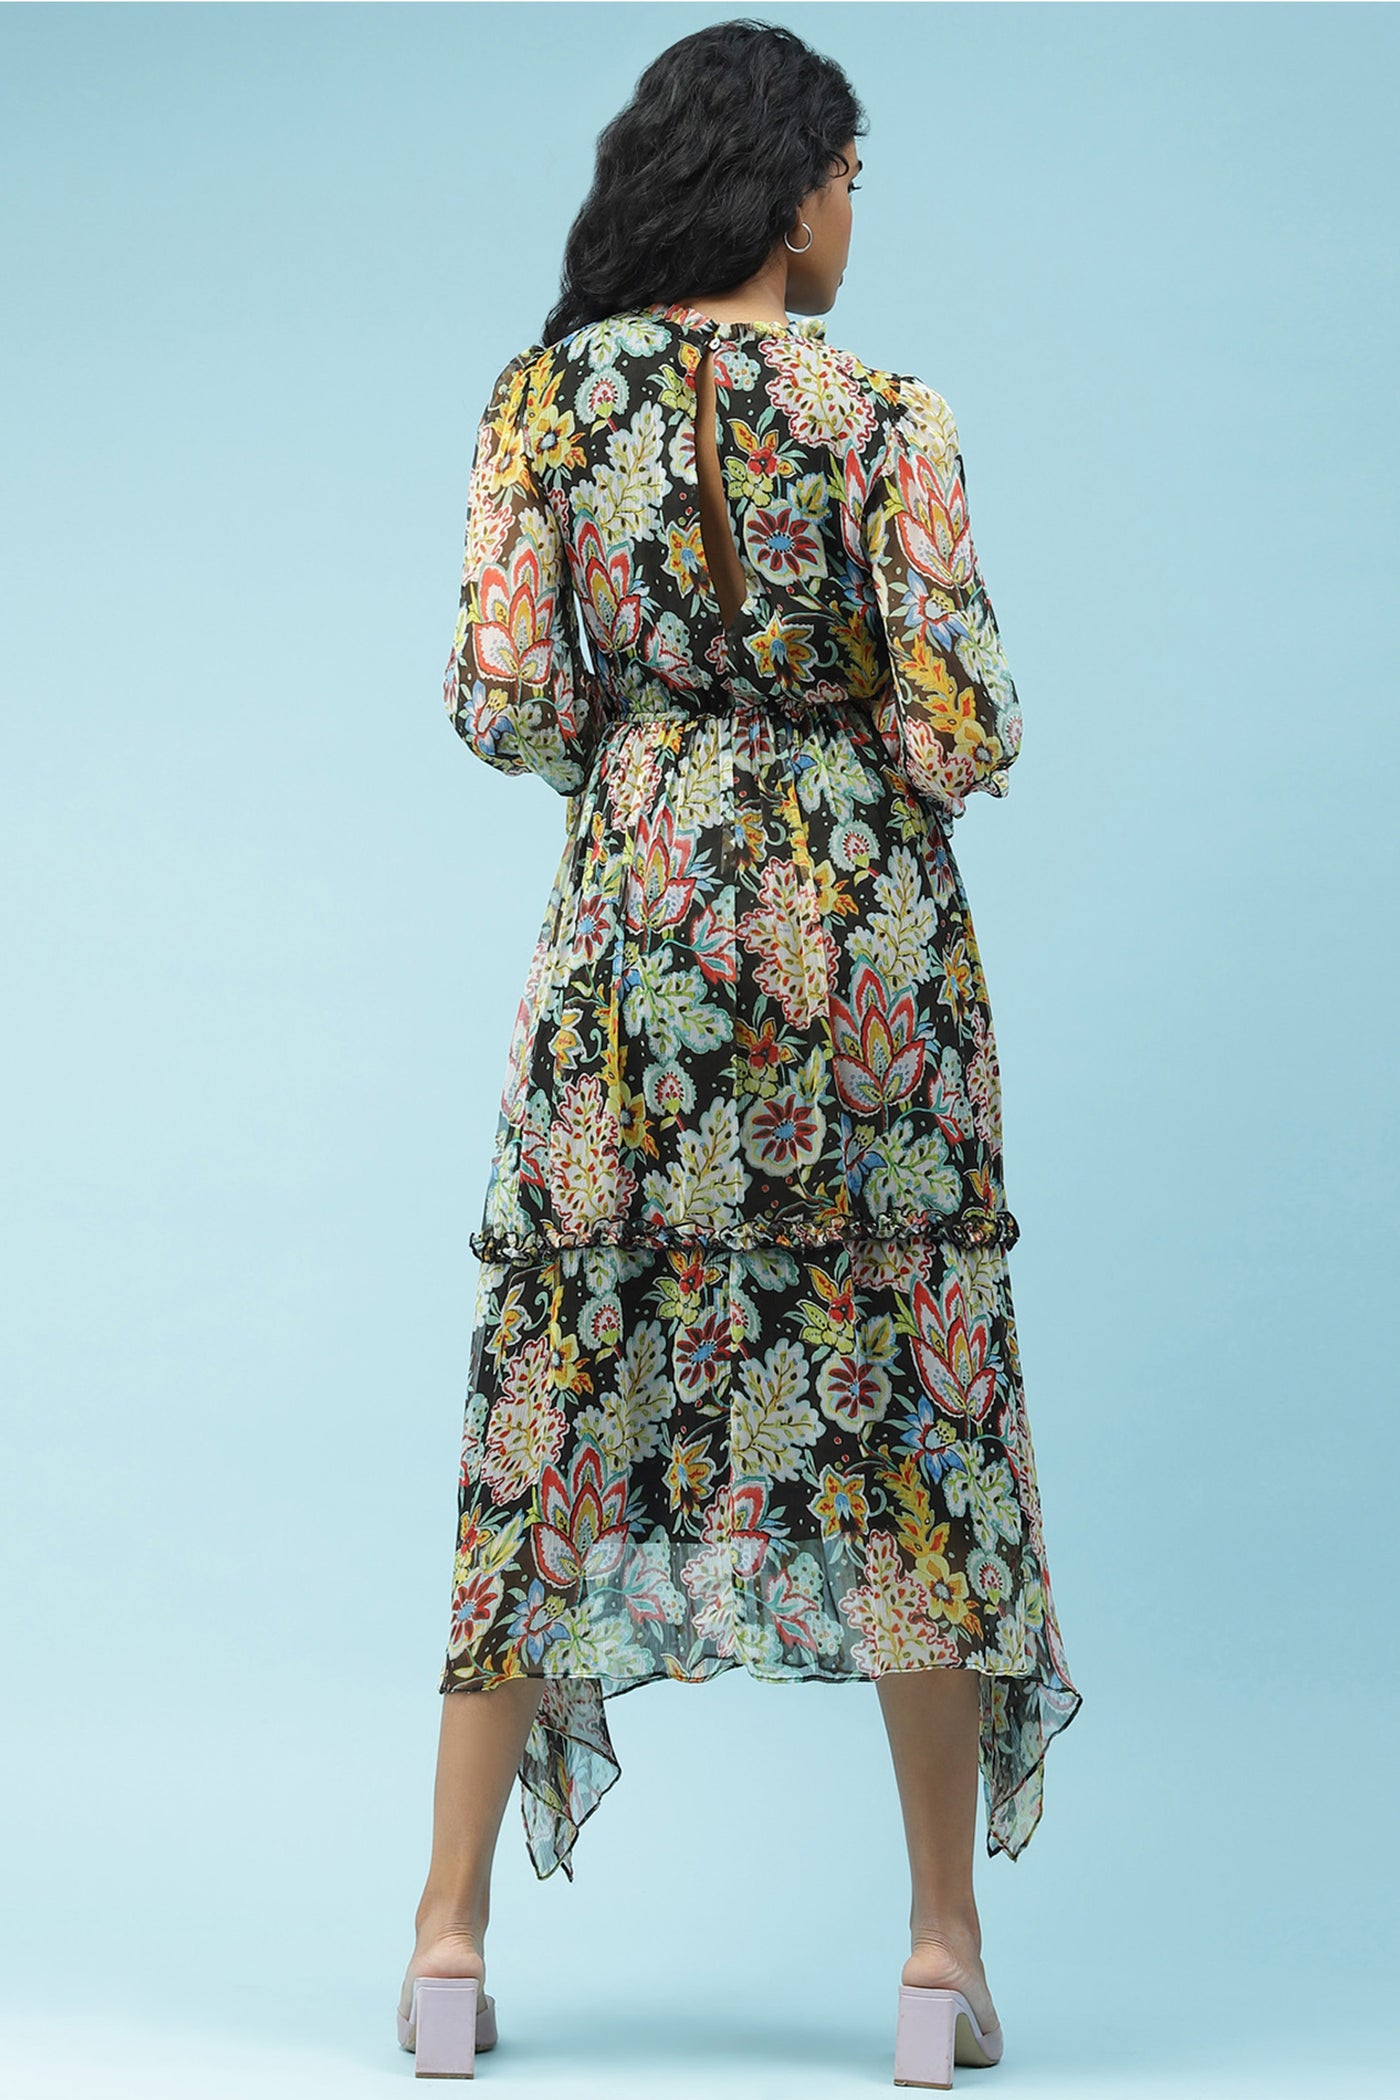 label ritu kumar Black Floral Printed Maxi Dress western  designer wear online shopping melange singapore